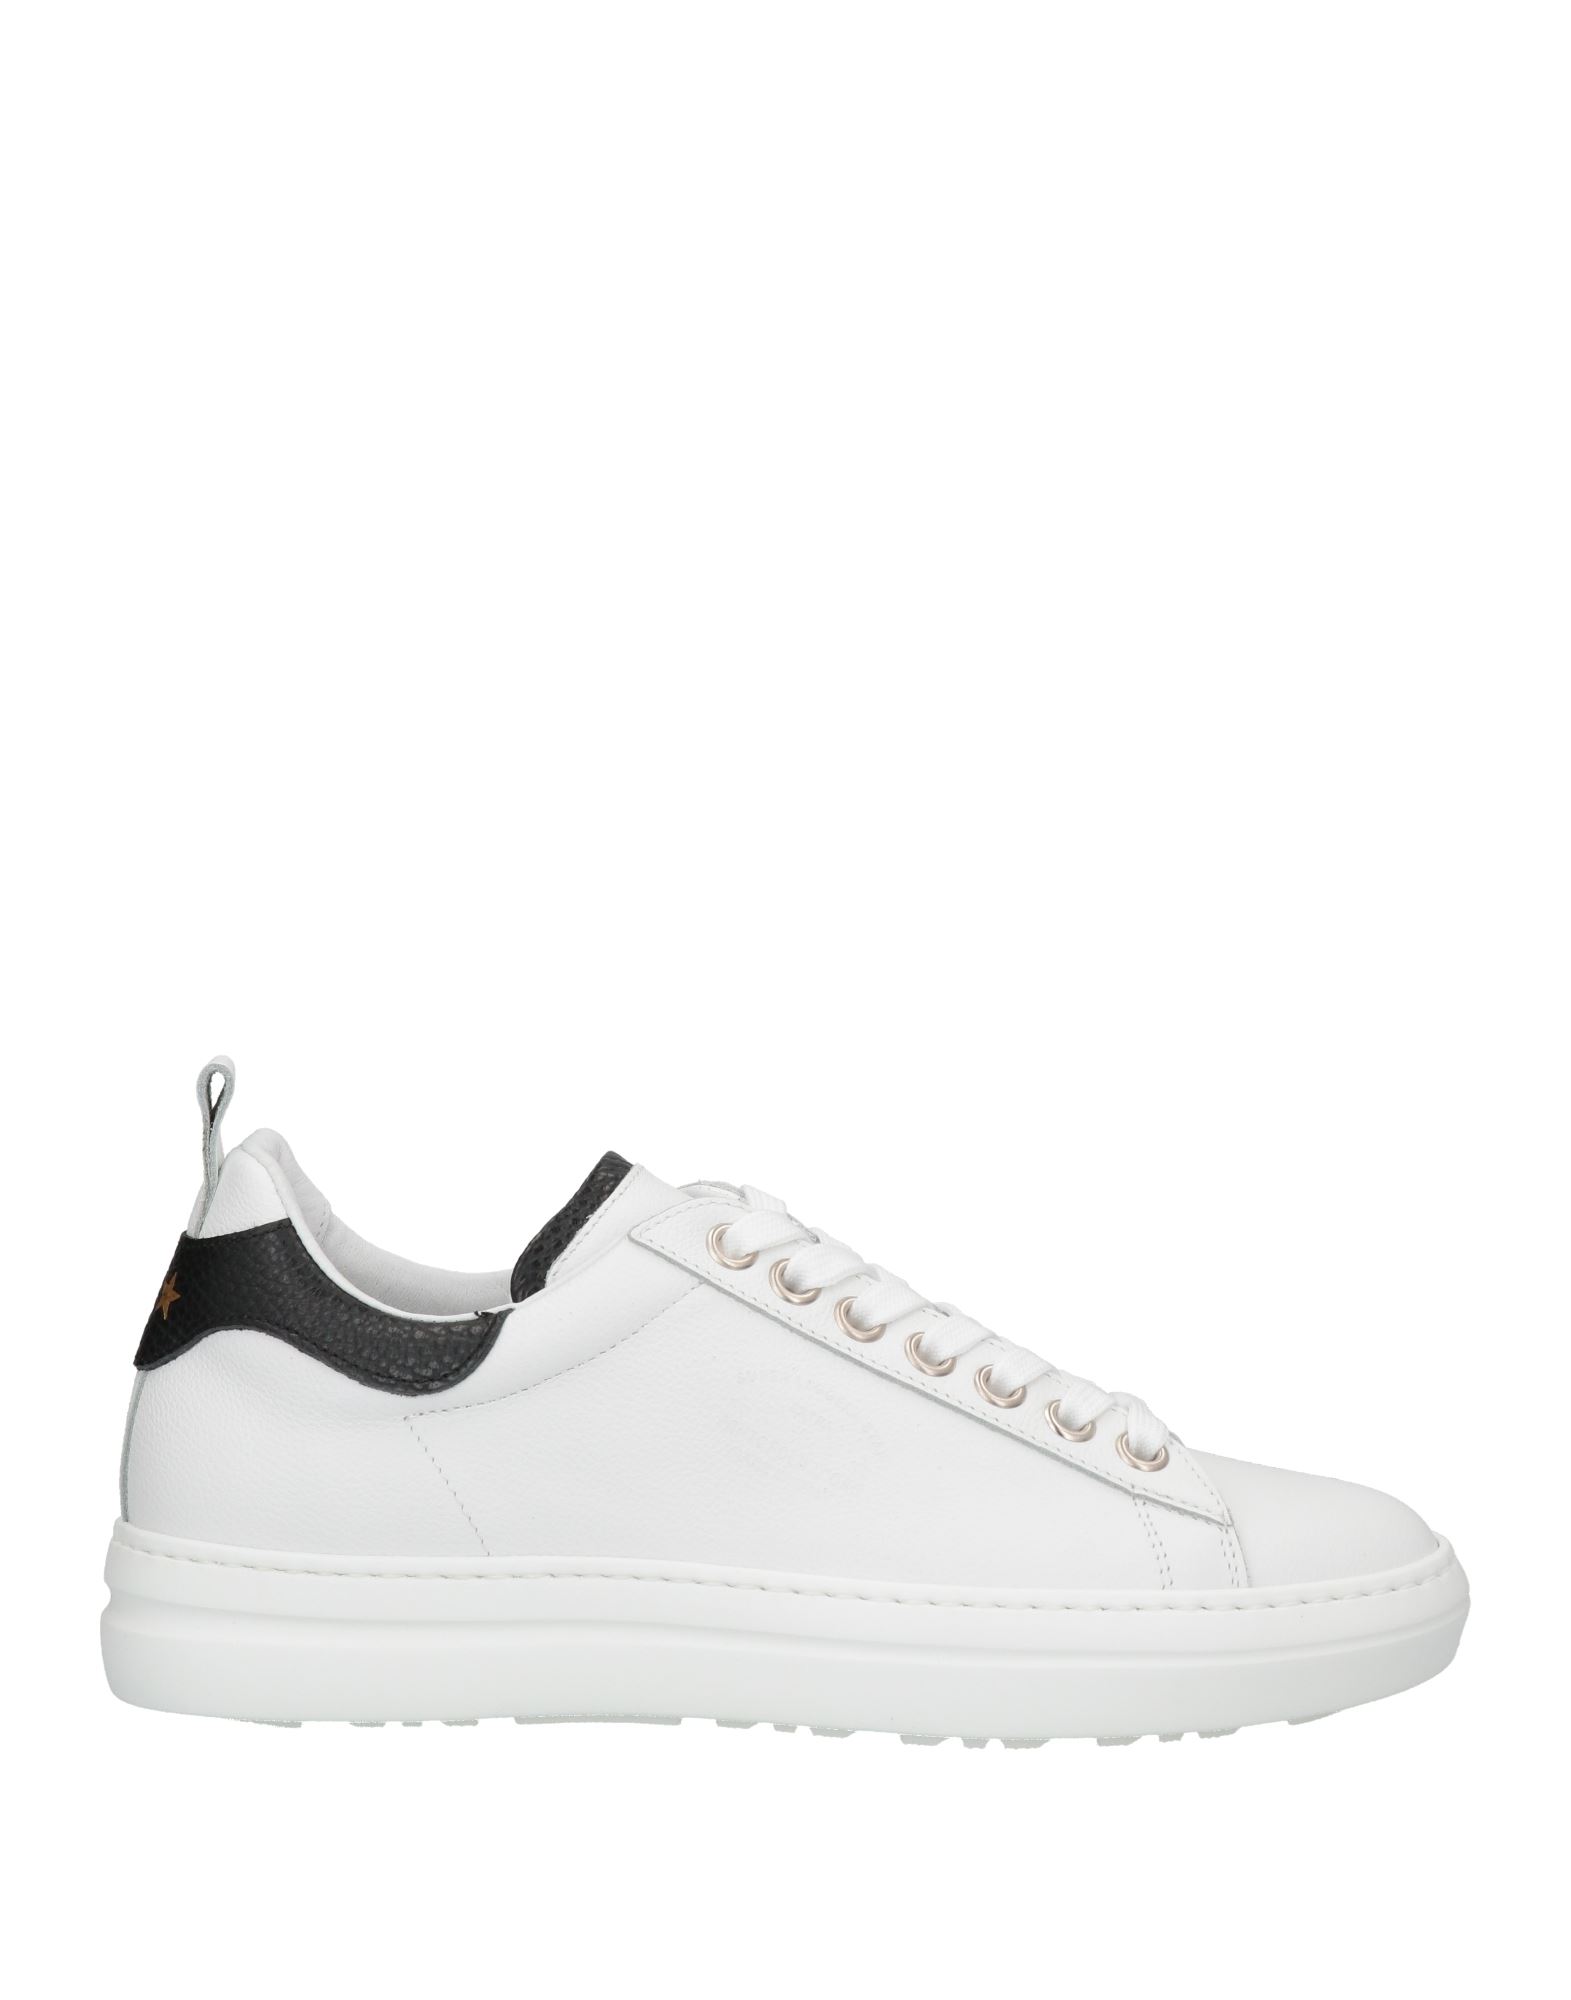 Pantofola D'oro Man Sneakers White Size 6 Soft Leather